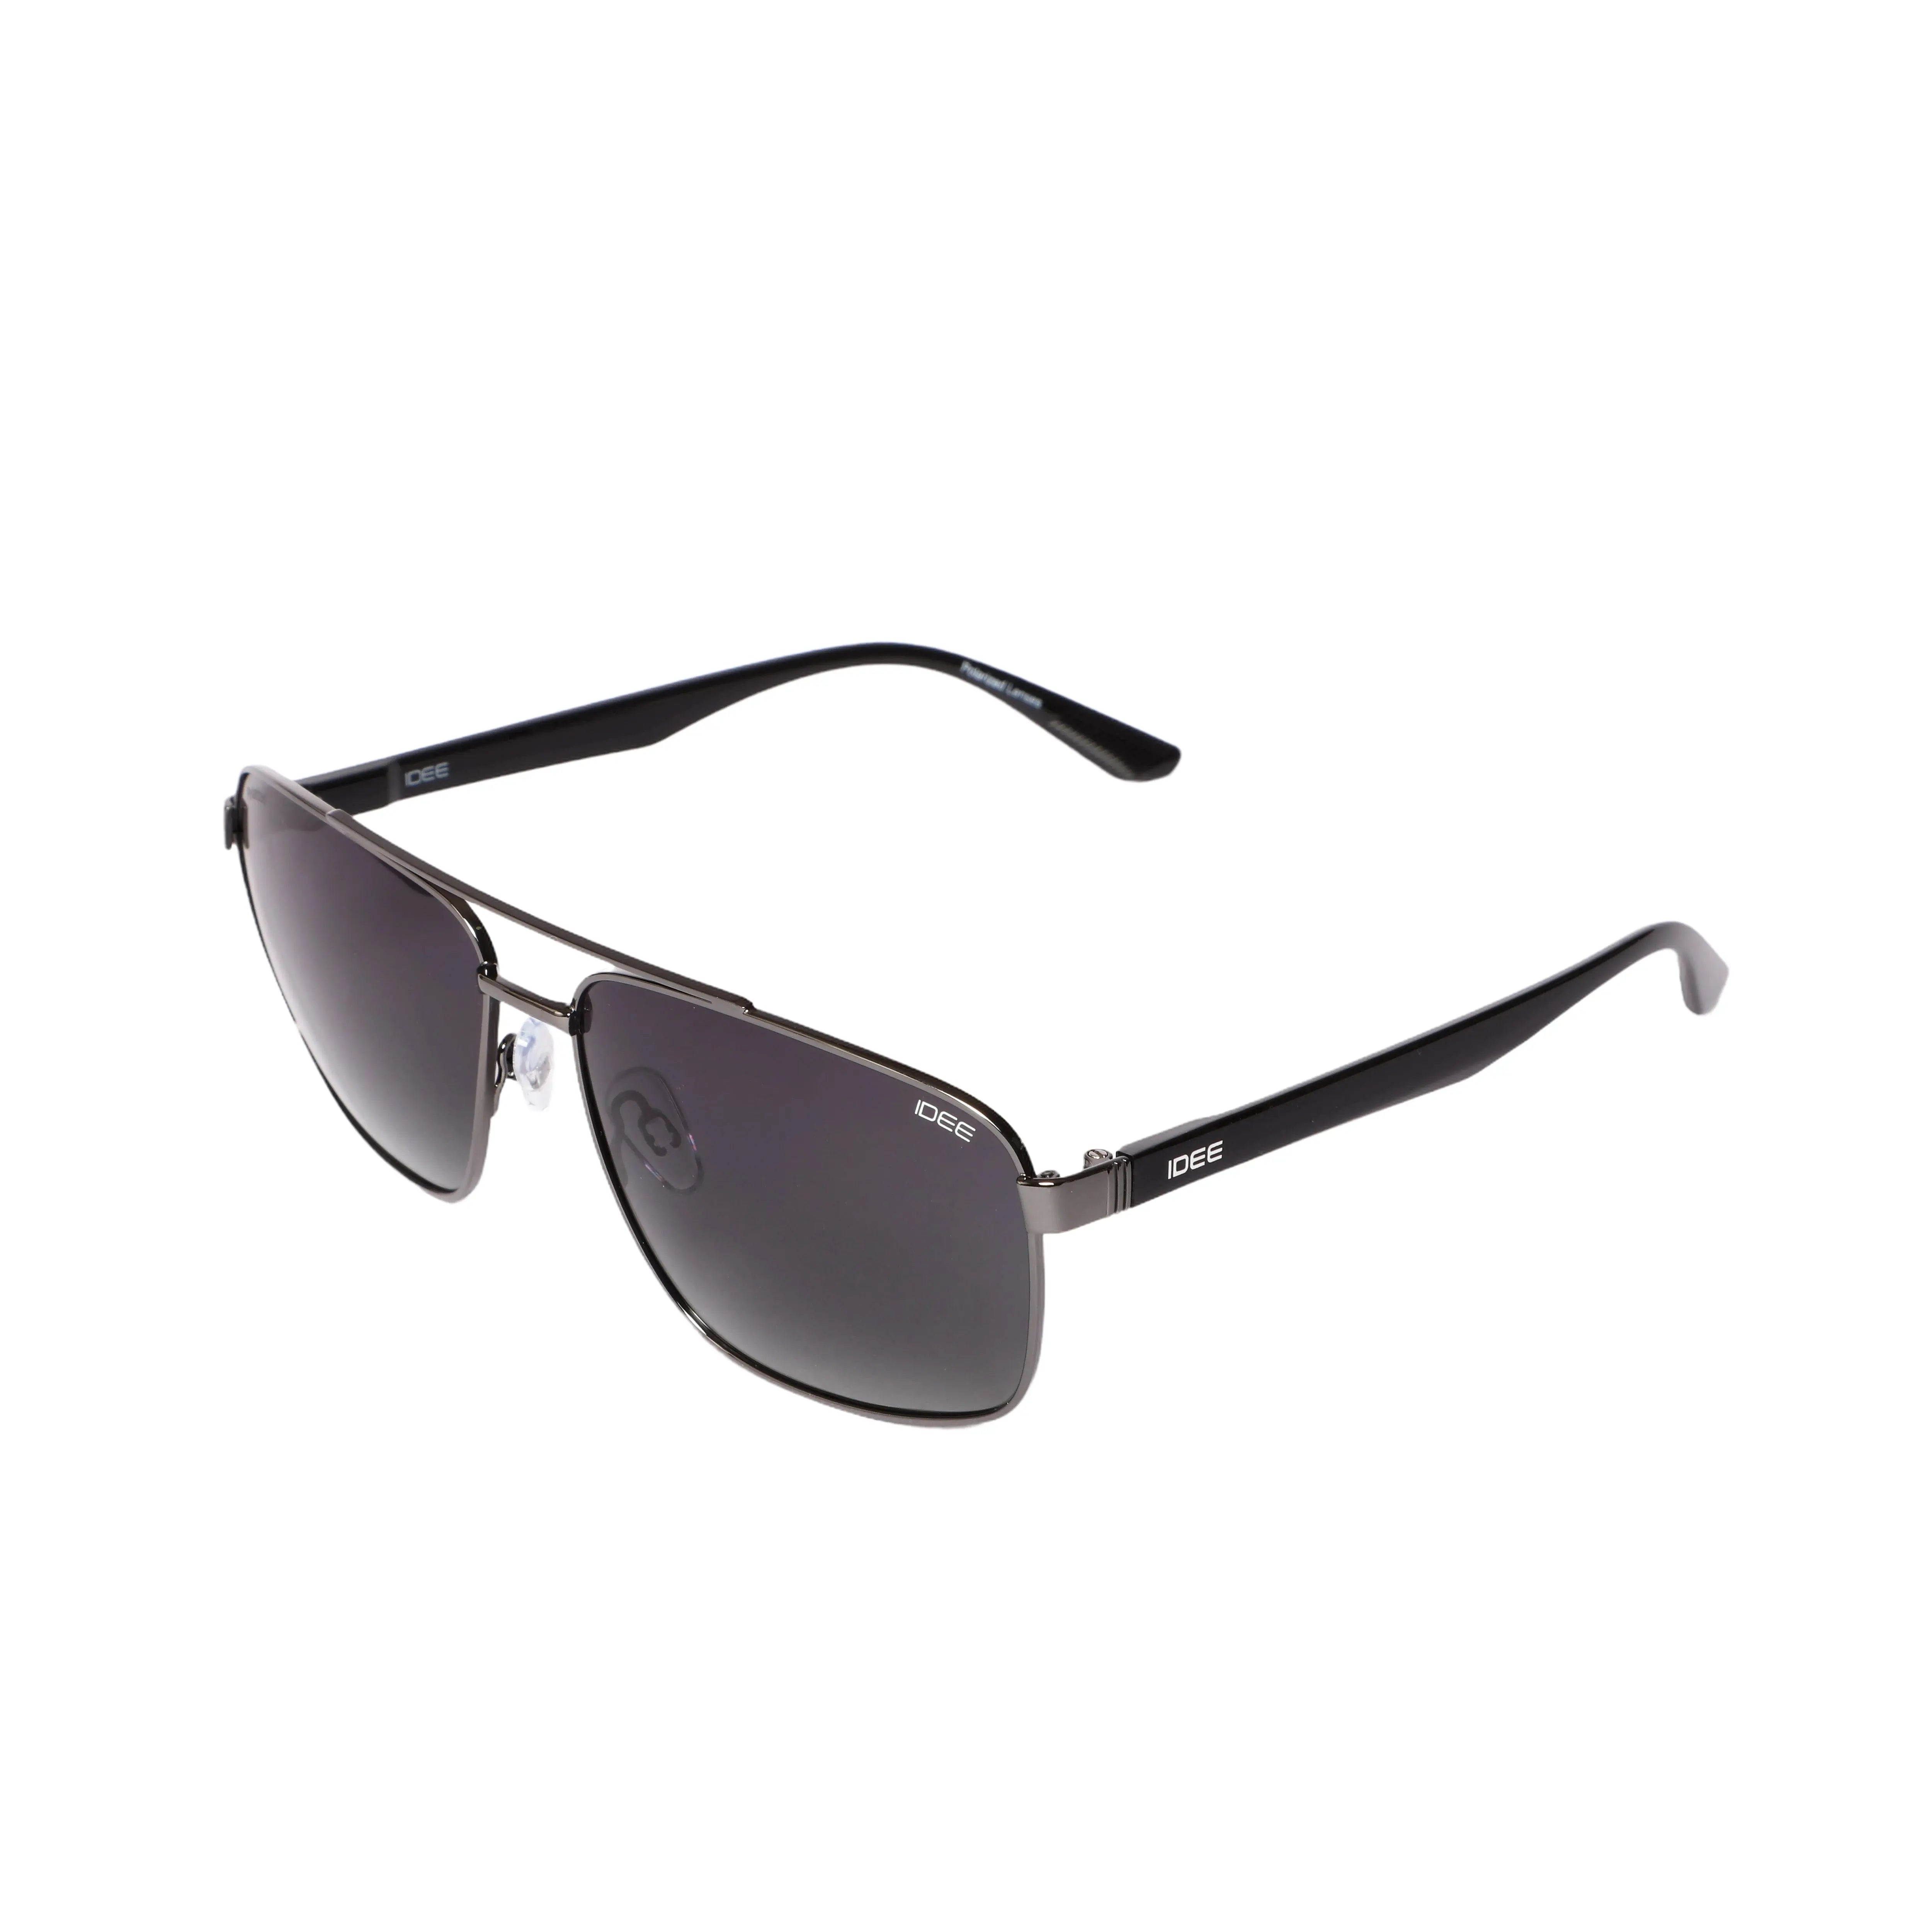 IDEE-S3001--C2 Sunglasses - Premium Sunglasses from IDEE - Just Rs. 3980! Shop now at Laxmi Opticians